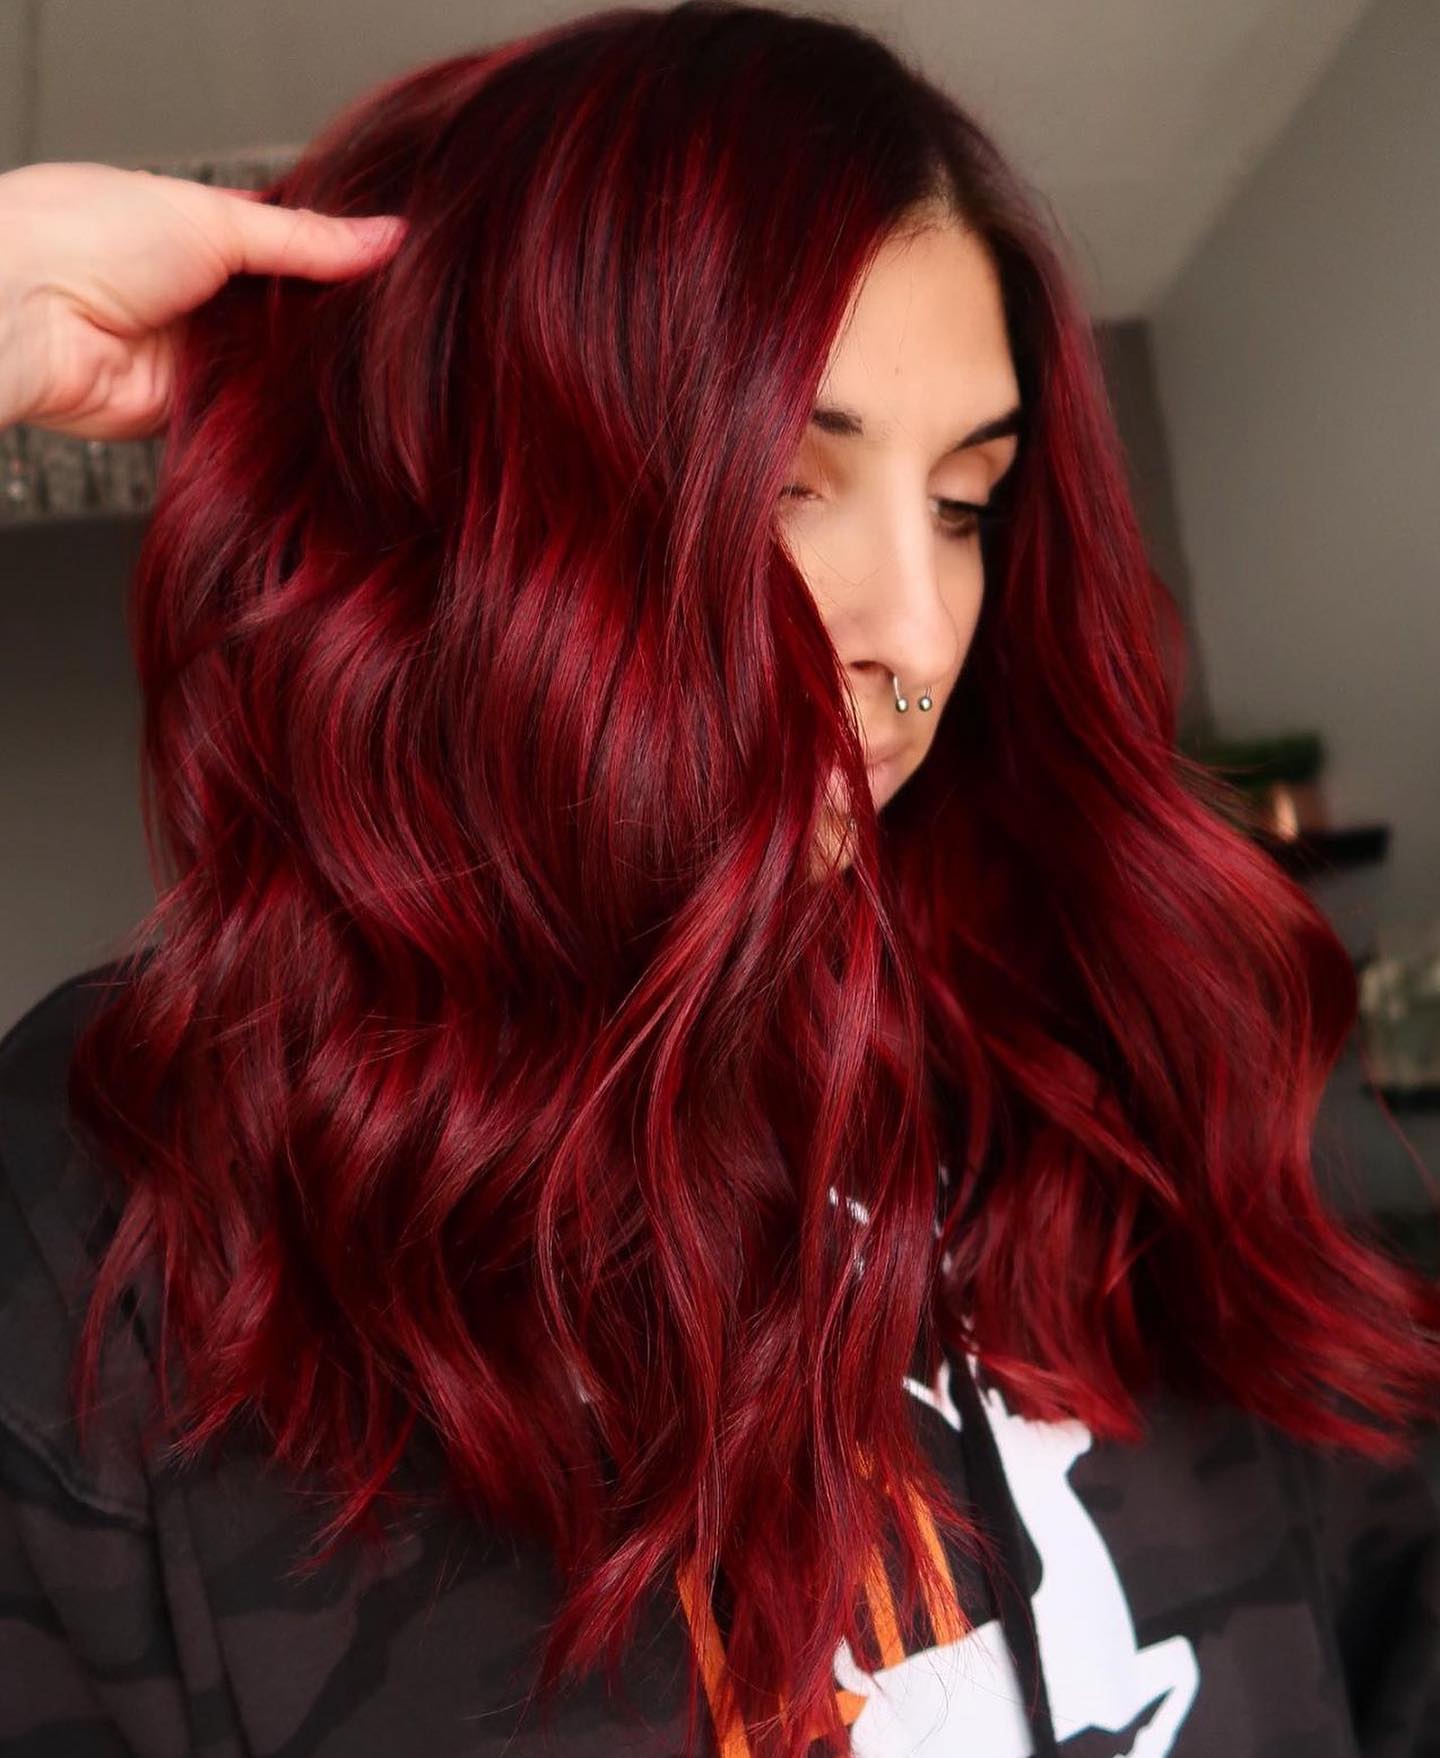 Vintage Red Waves on Long Hair